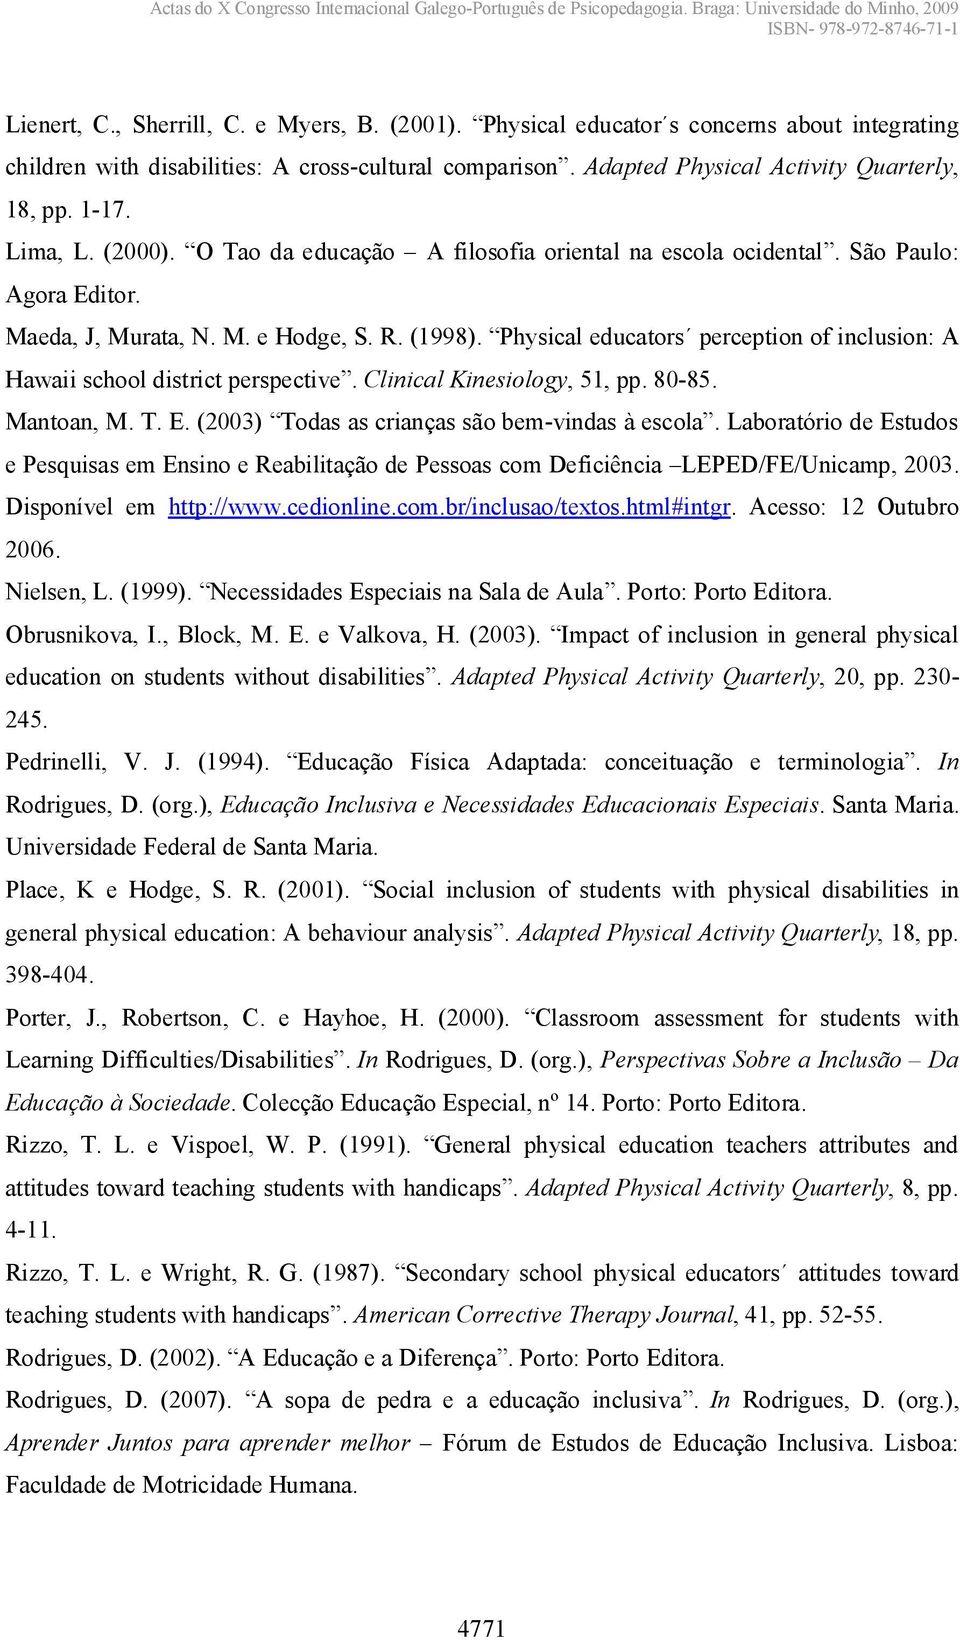 Physicaleducatorś perceptionofinclusion:a Hawaischooldistrictperspective.Clinical Kinesiology, 51, pp. 80-85. Mantoan,M.T.E.(2003) Todasascriançassãobem -vindasàescola.